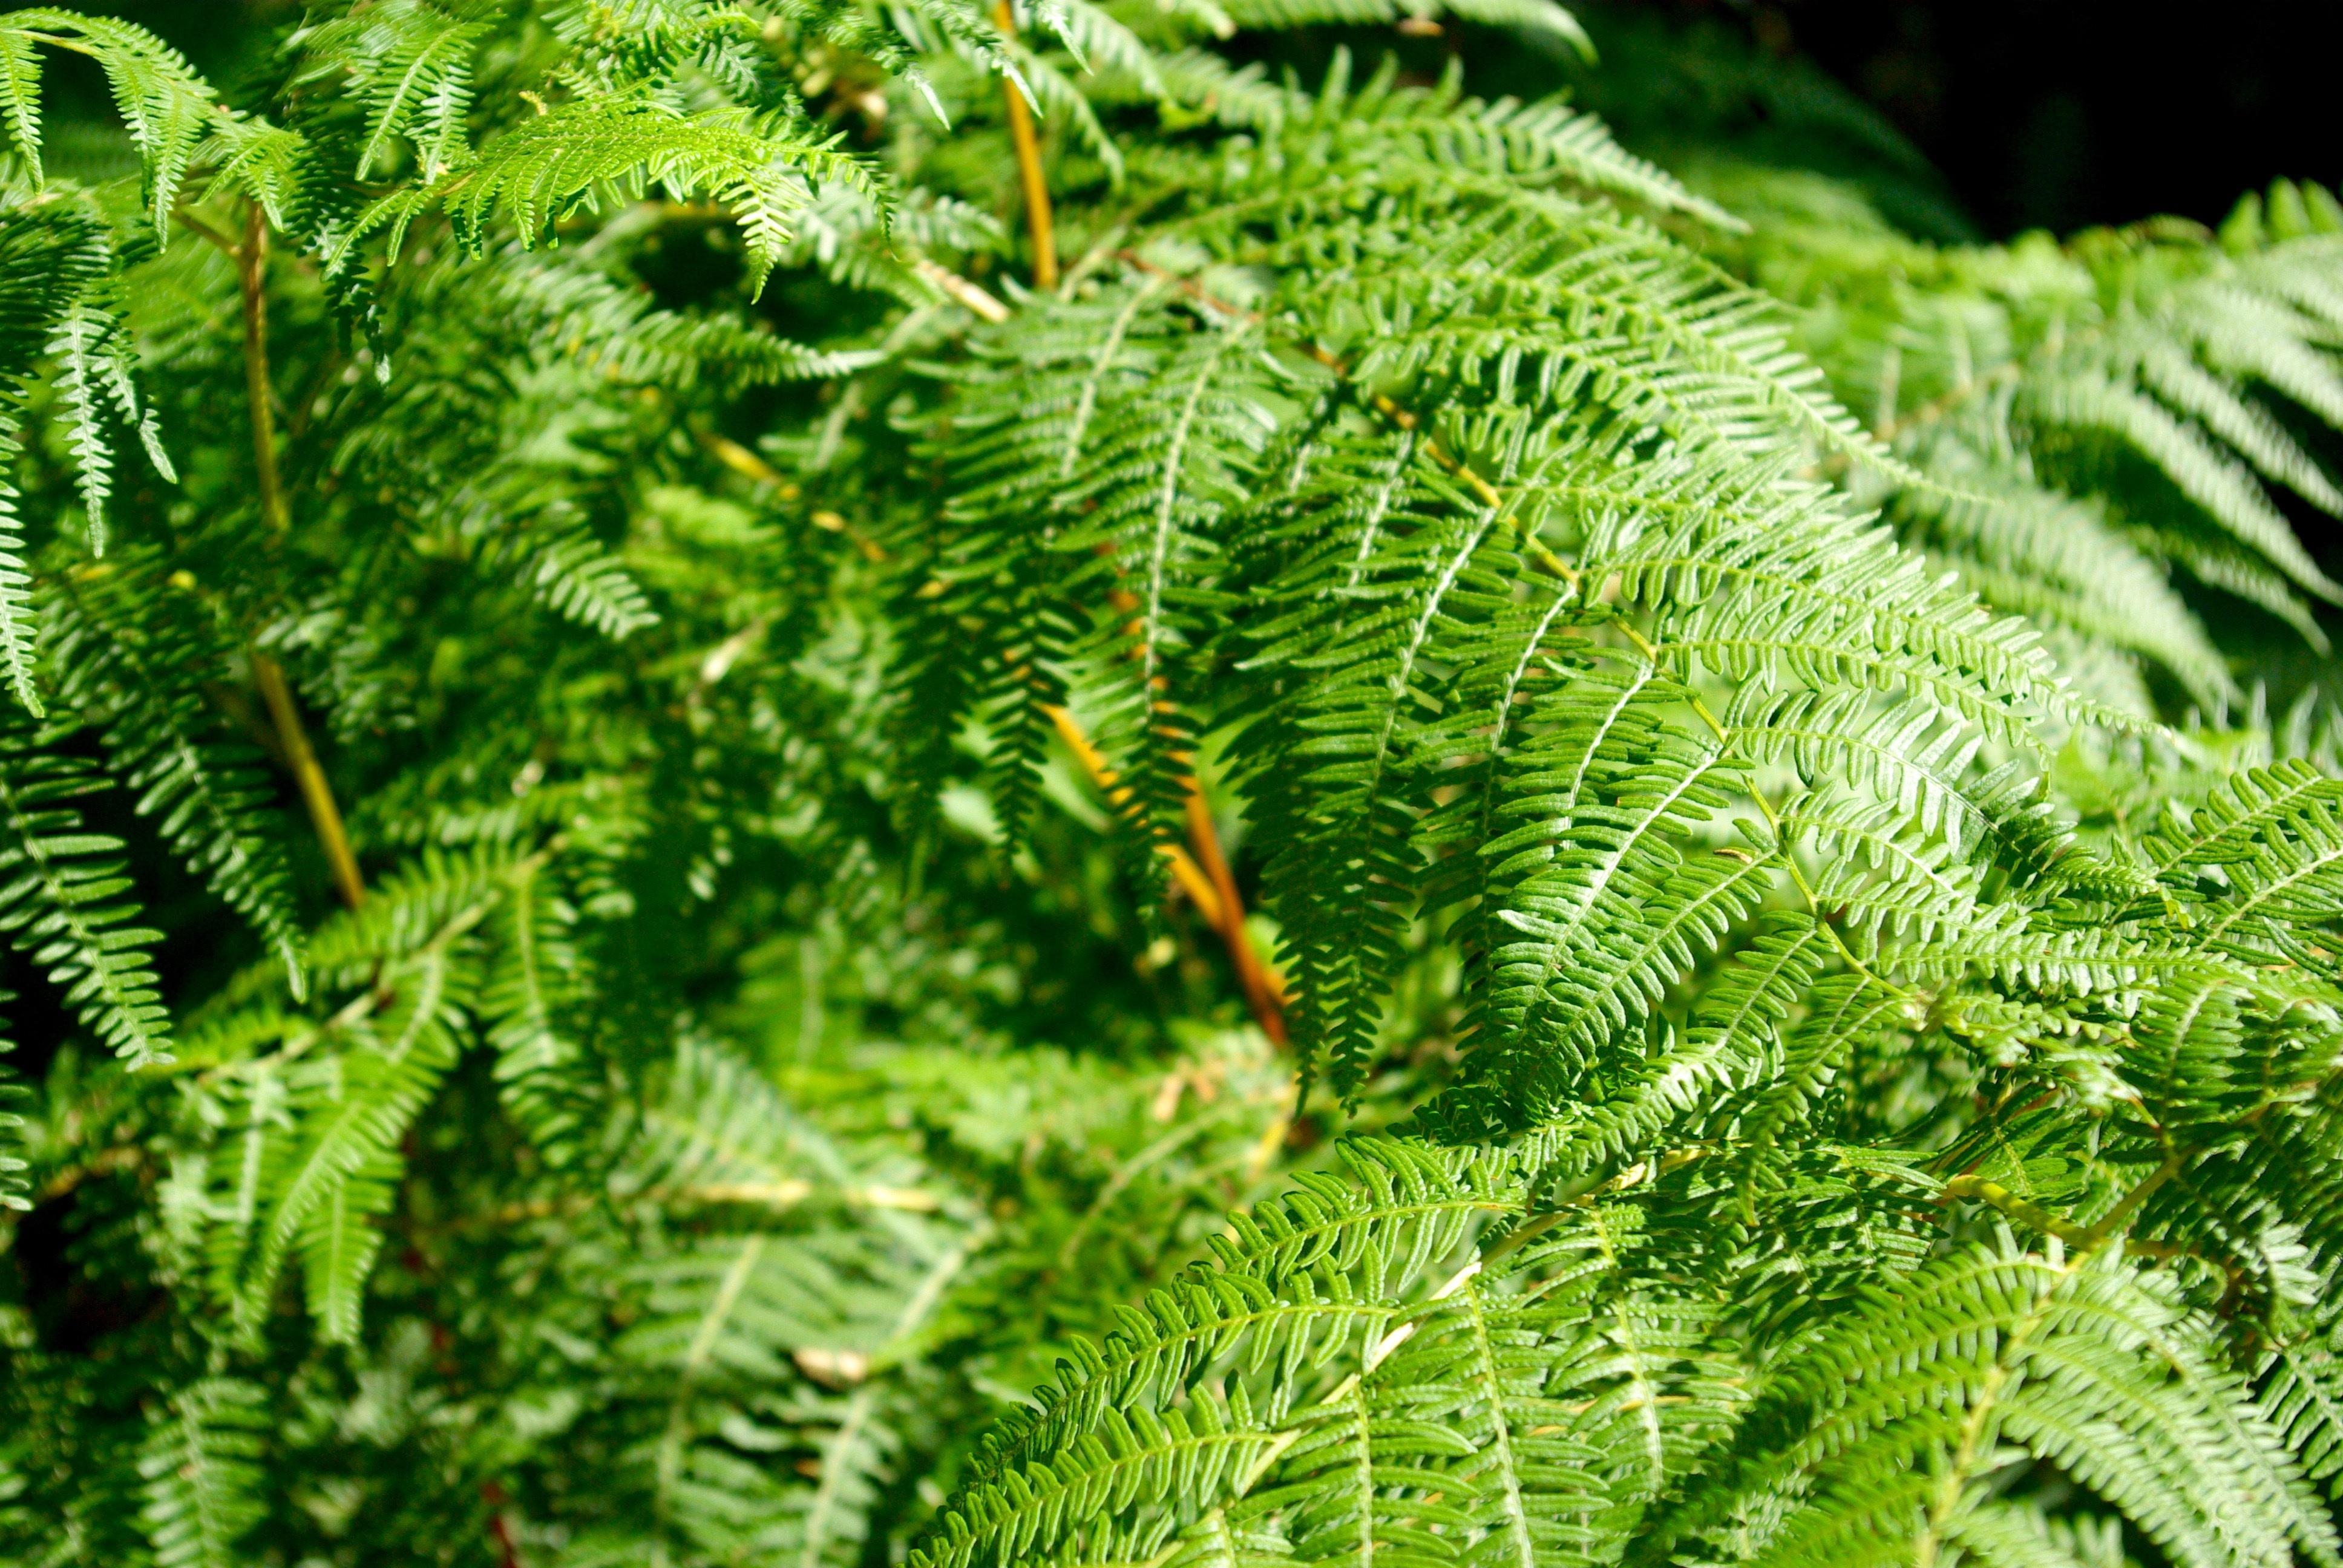 tree-nature-branch-plant-leaf-flower-moss-green-botany-fir-flora-fern-plants-close-up-leaves-spruce-vegetation-rainforest-land-plant-ferns-and-horsetails-vascular-plant-ostrich-fern-1167274.jpg